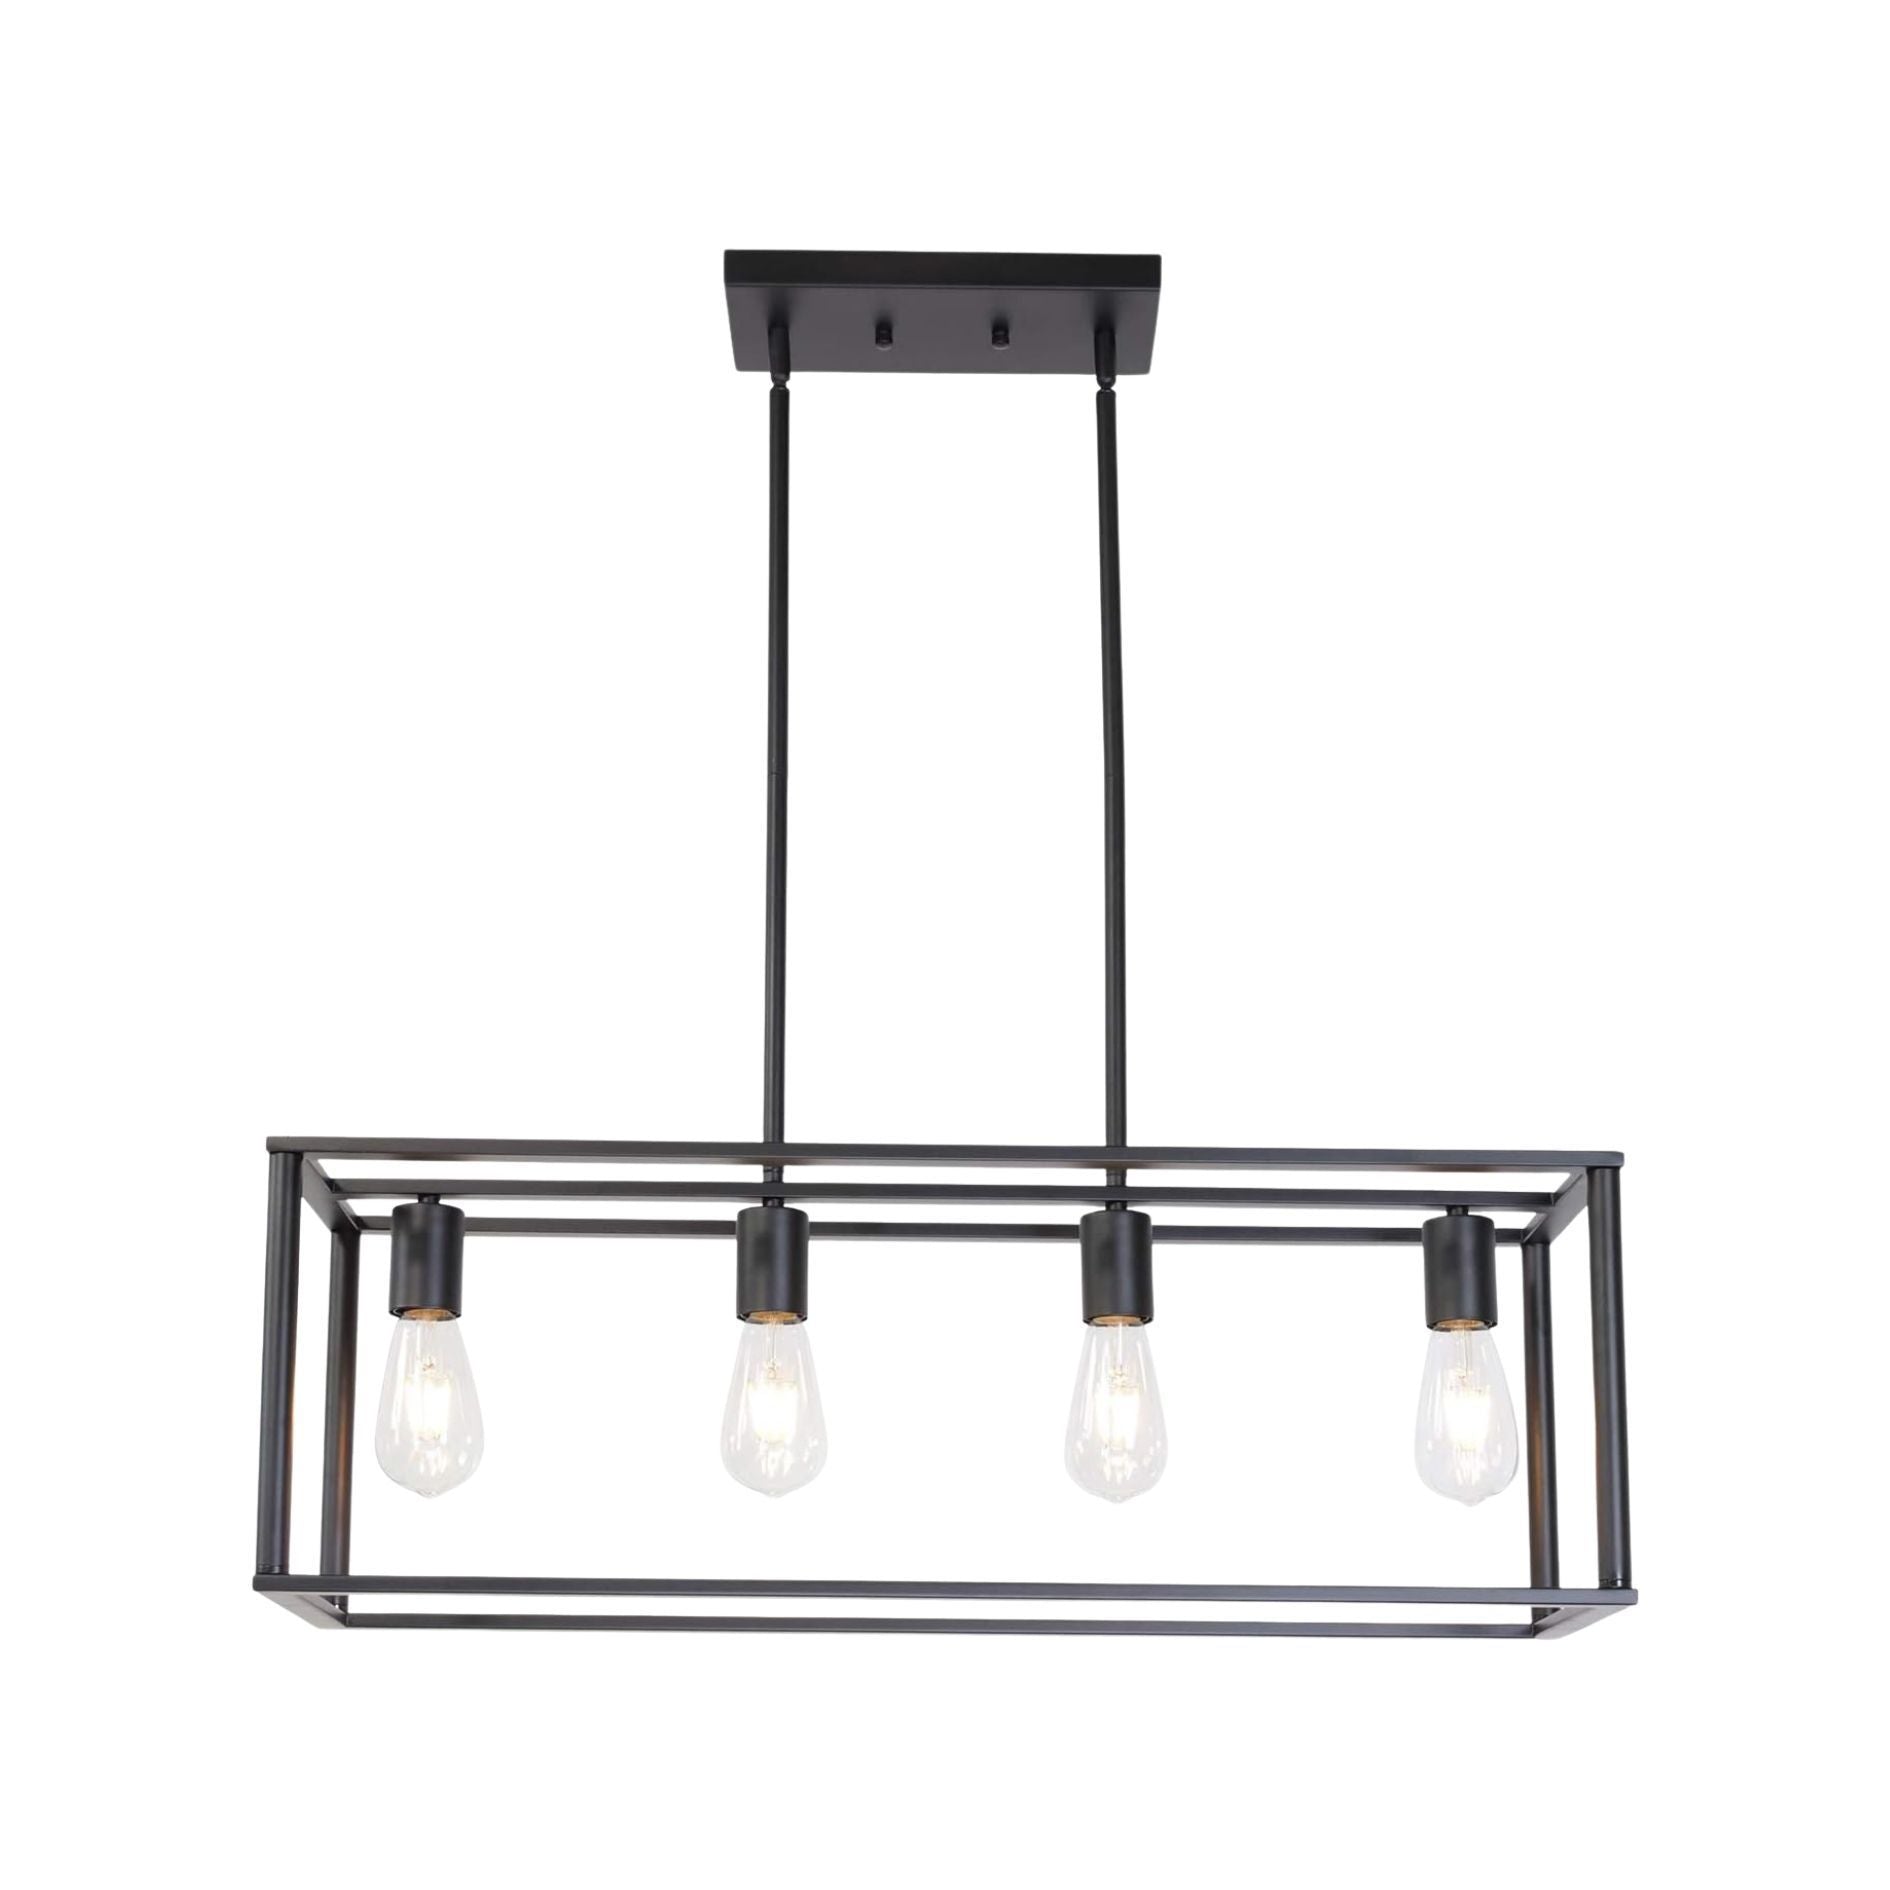 TM-HOME-Pendant-Lighting-4-Light-Industrial-Vintage-Open-Frame-Rectangle-Chandeliers-Modern-Black-Linear-Cage-Ceiling-Light-Fixture-Lamps